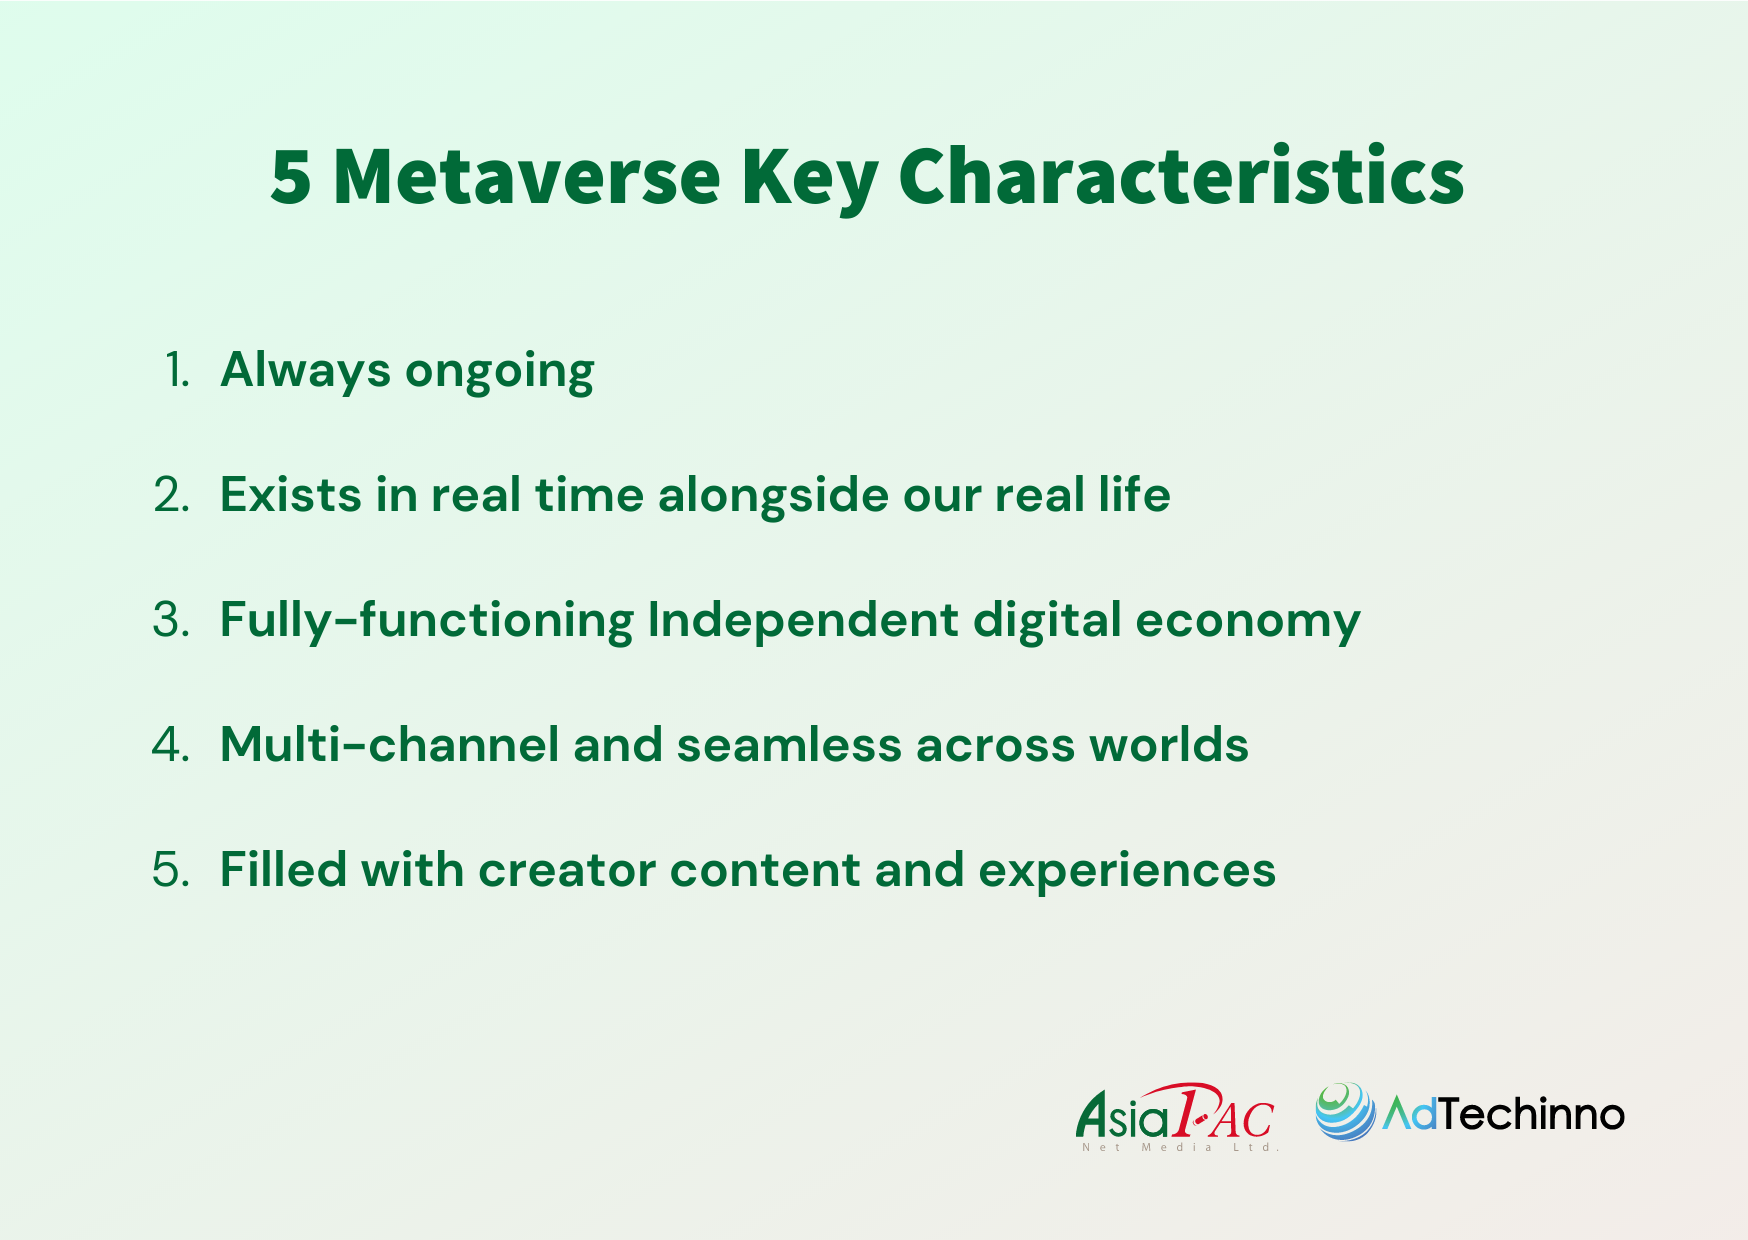 Metaverse Marketing_2_Metaverse key characteristics.png